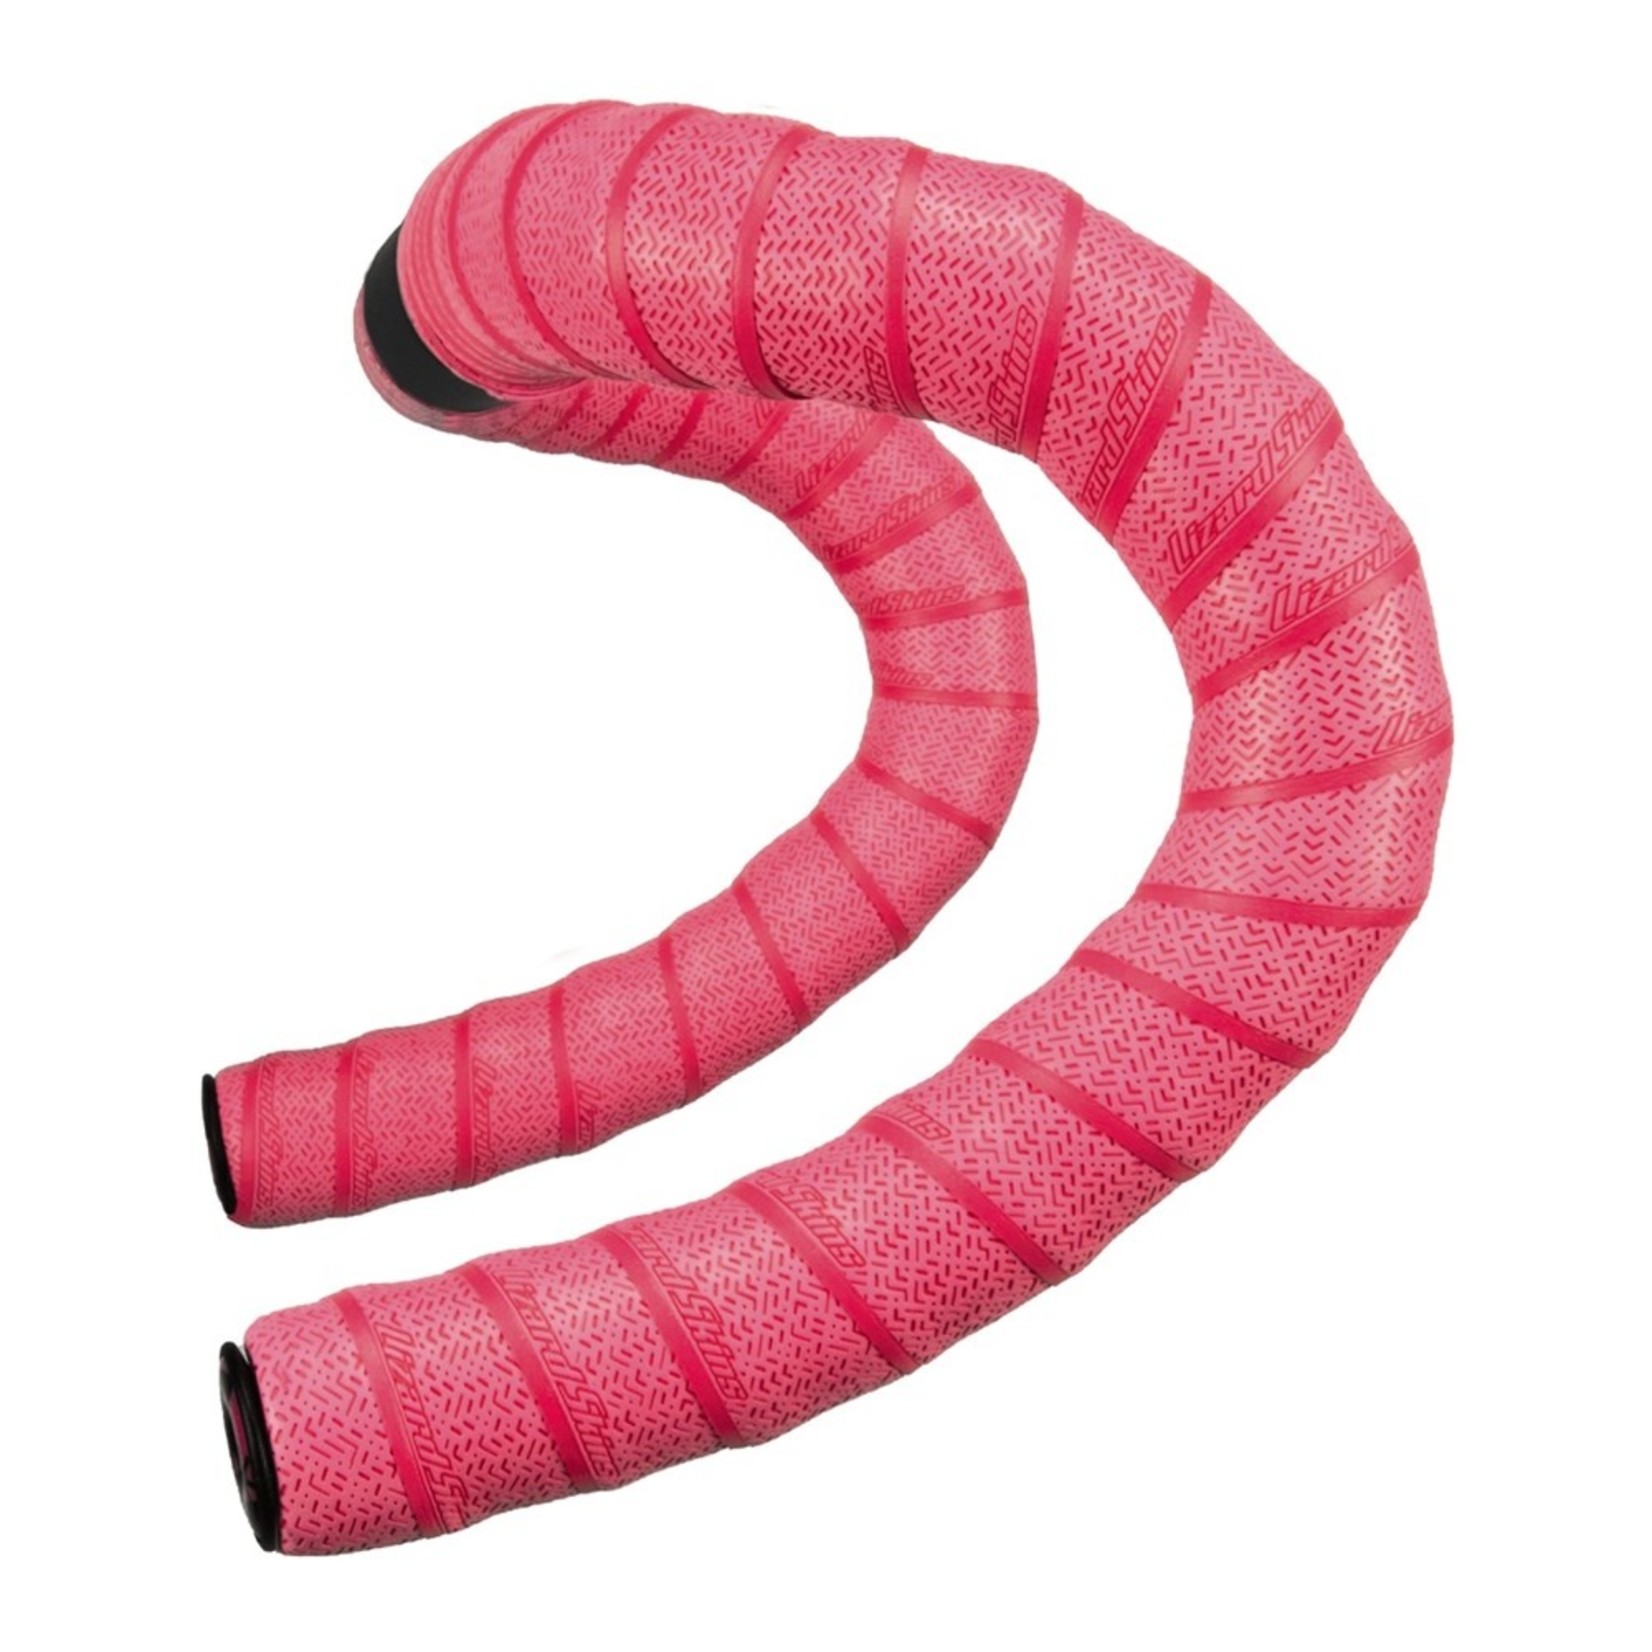 Lizard Skin Lizard Skins DSP Handle Bar Tape - 2.5mm - Neon Pink 226cm Length Sold In Pair